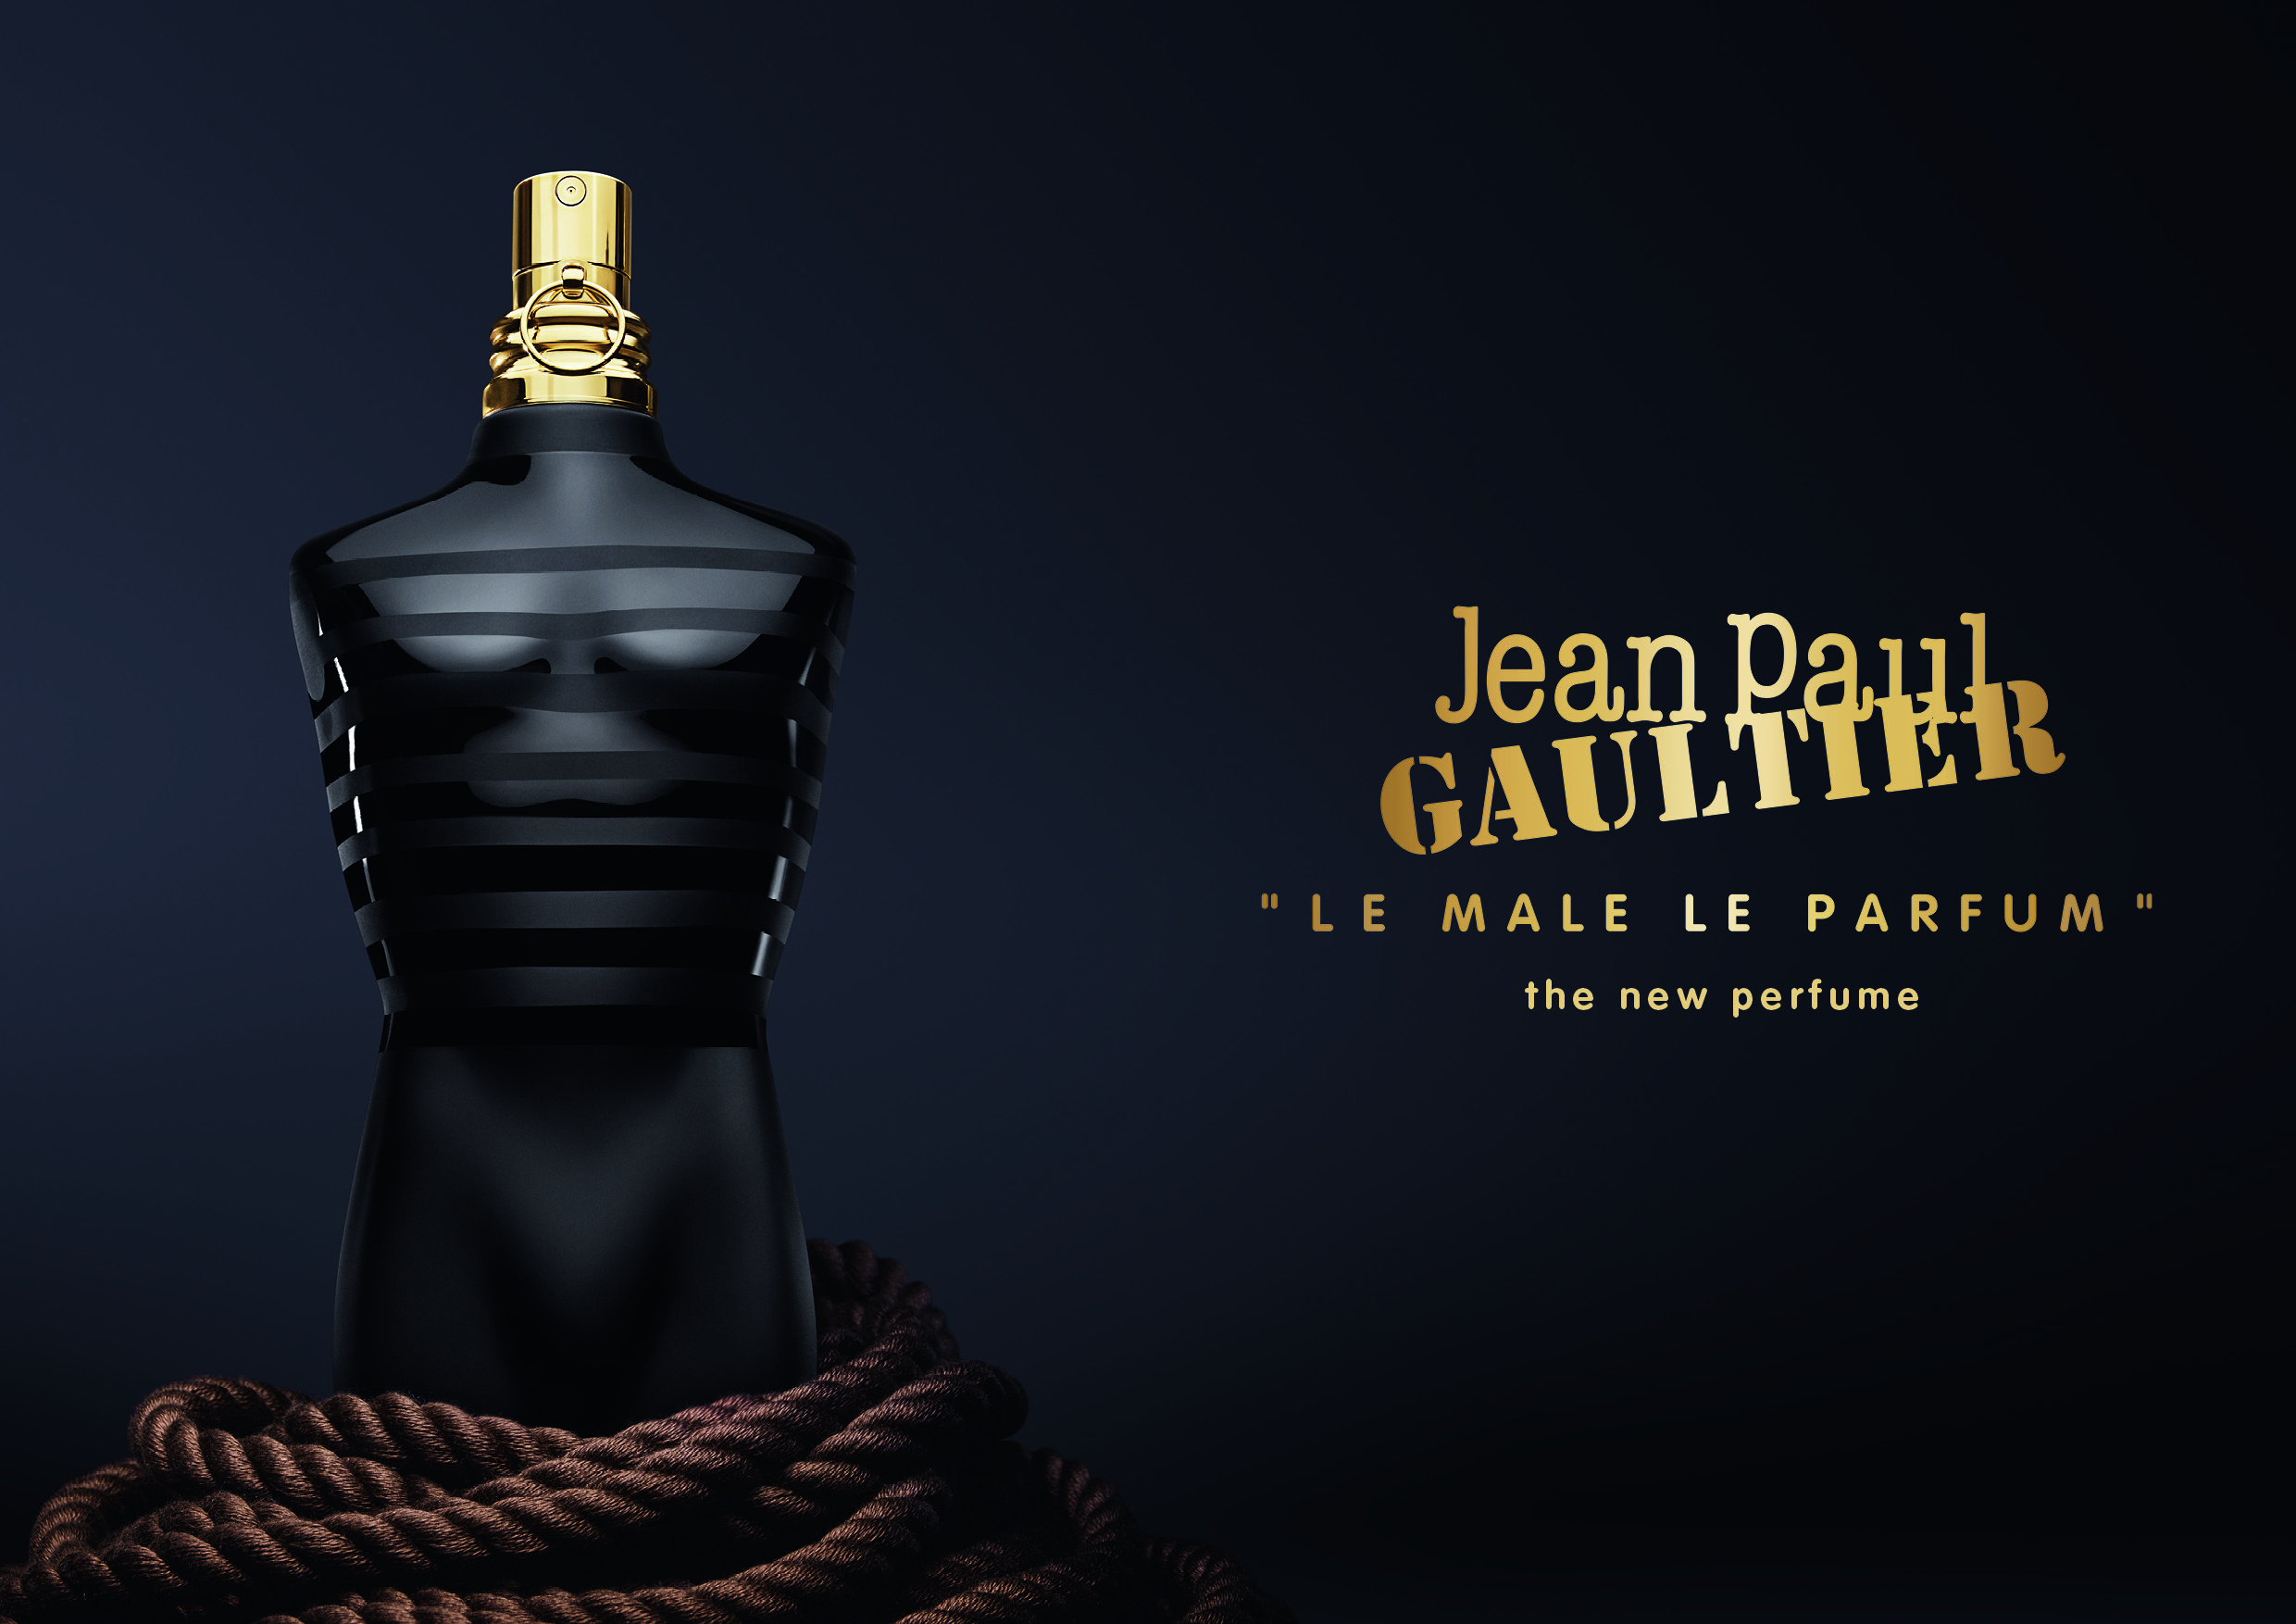 Le Male Le Parfum Jean Paul Gaultier одеколон — новый аромат для мужчин